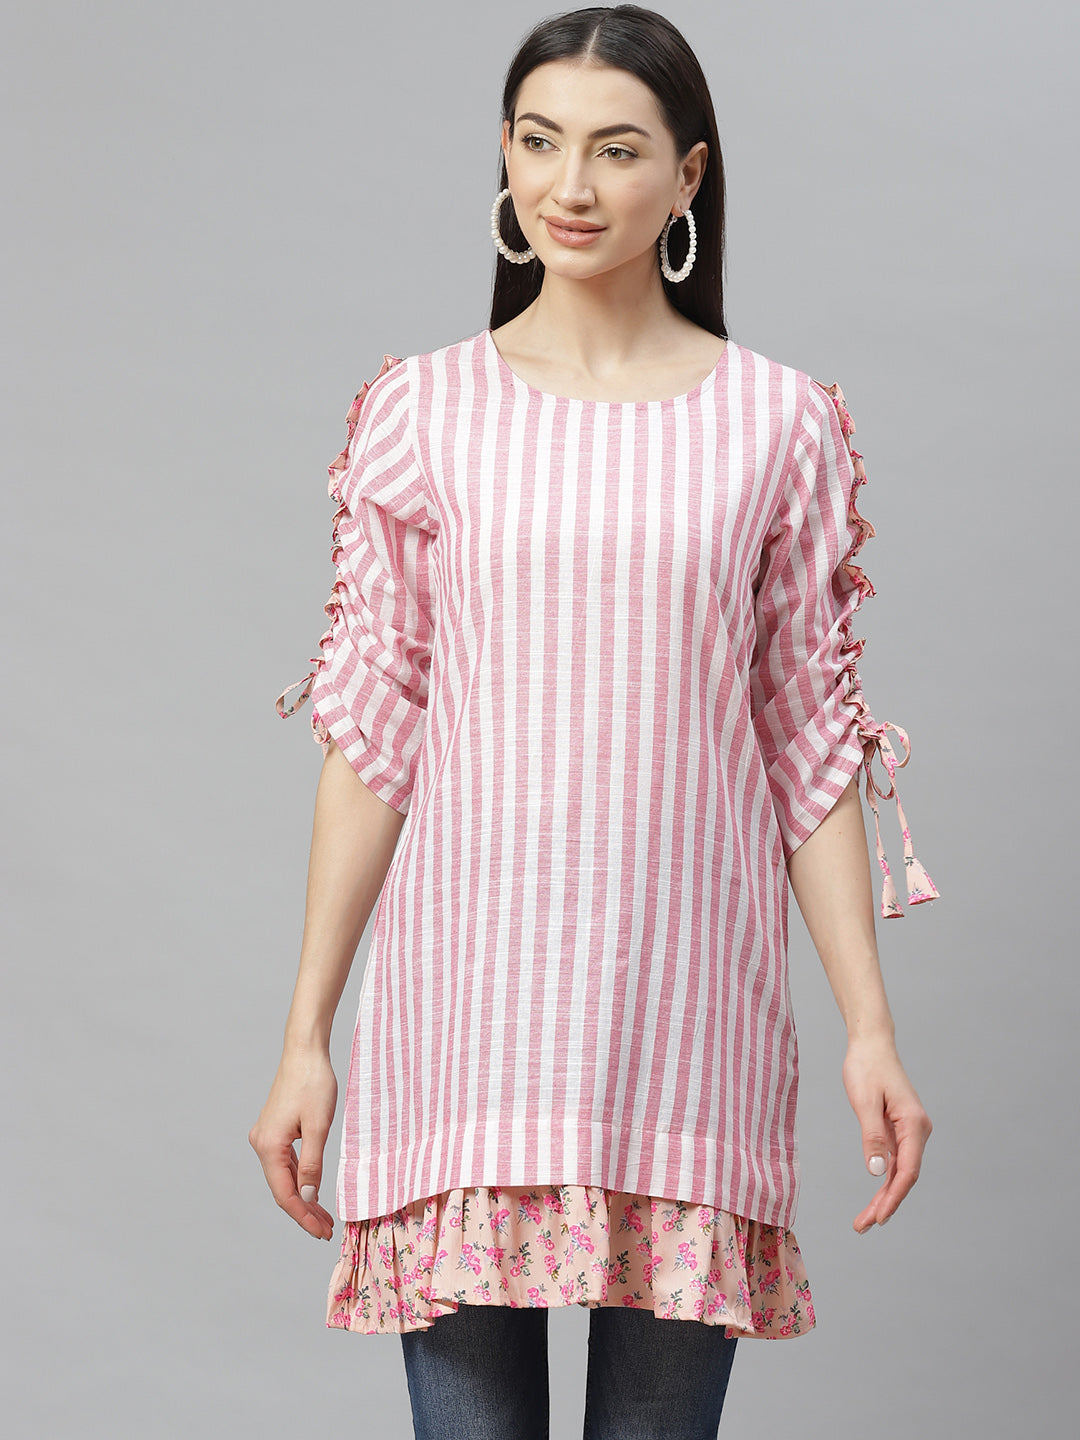 Myshka Women's Multicolor cotton Printed  3/4 Sleeve Round Neck Casual Top